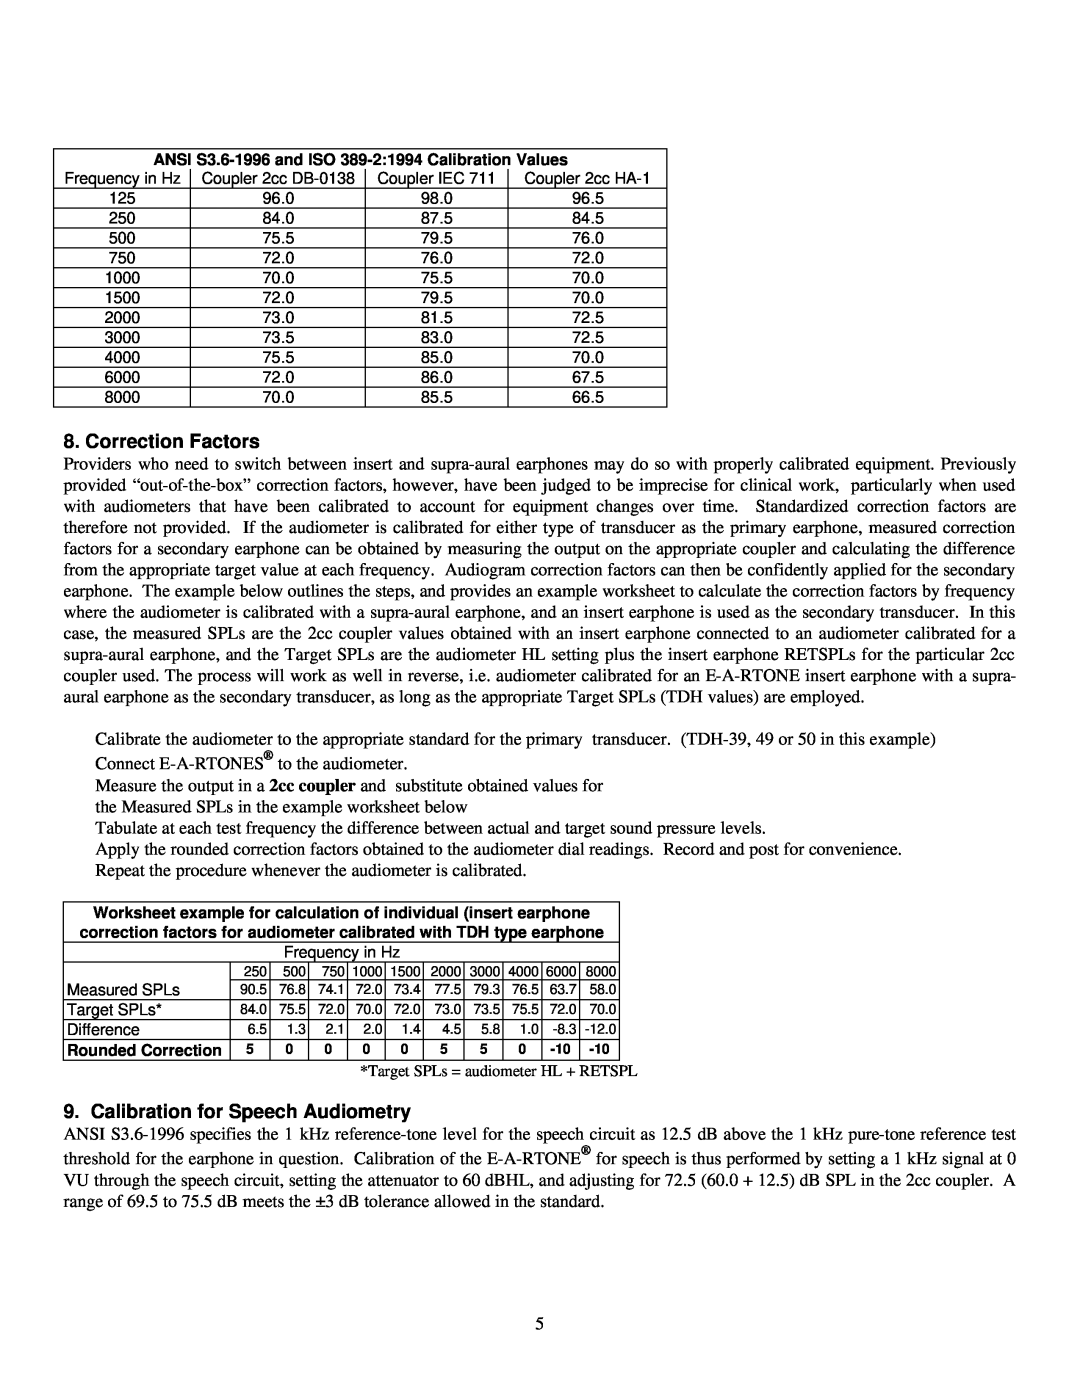 AOSafety E-A-RTONE 3A manual Correction Factors, Calibration for Speech Audiometry 